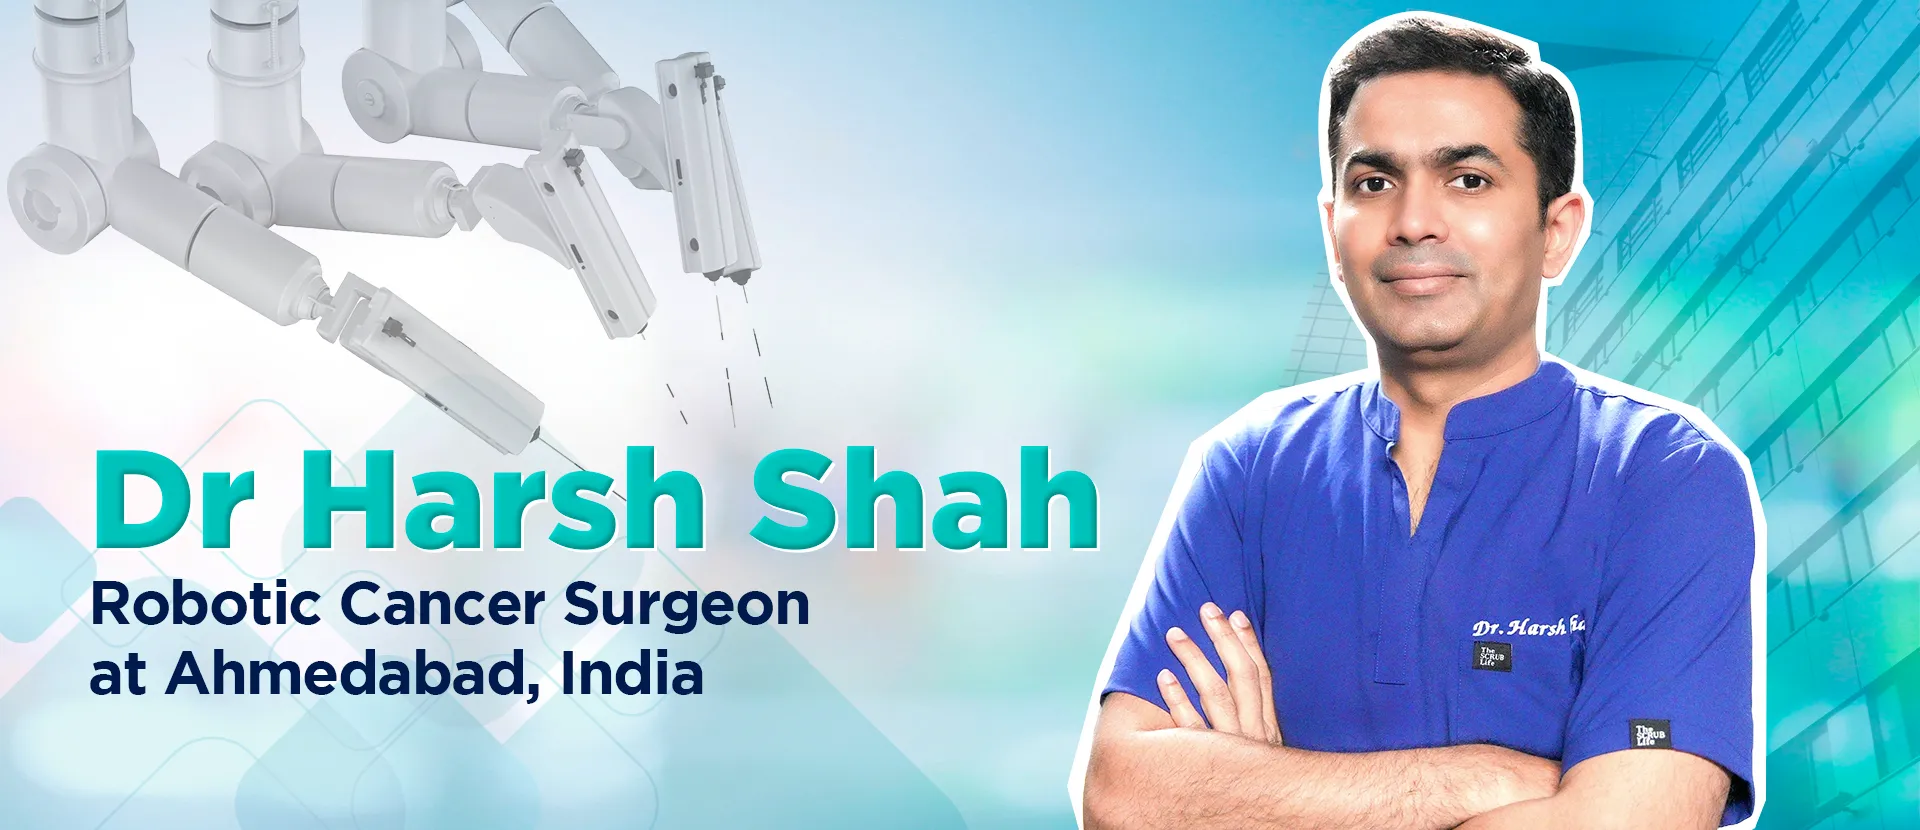 Dr Harsh Shah - Robotic Cancer Surgeon in Ahmedabad, Gujarat, India.